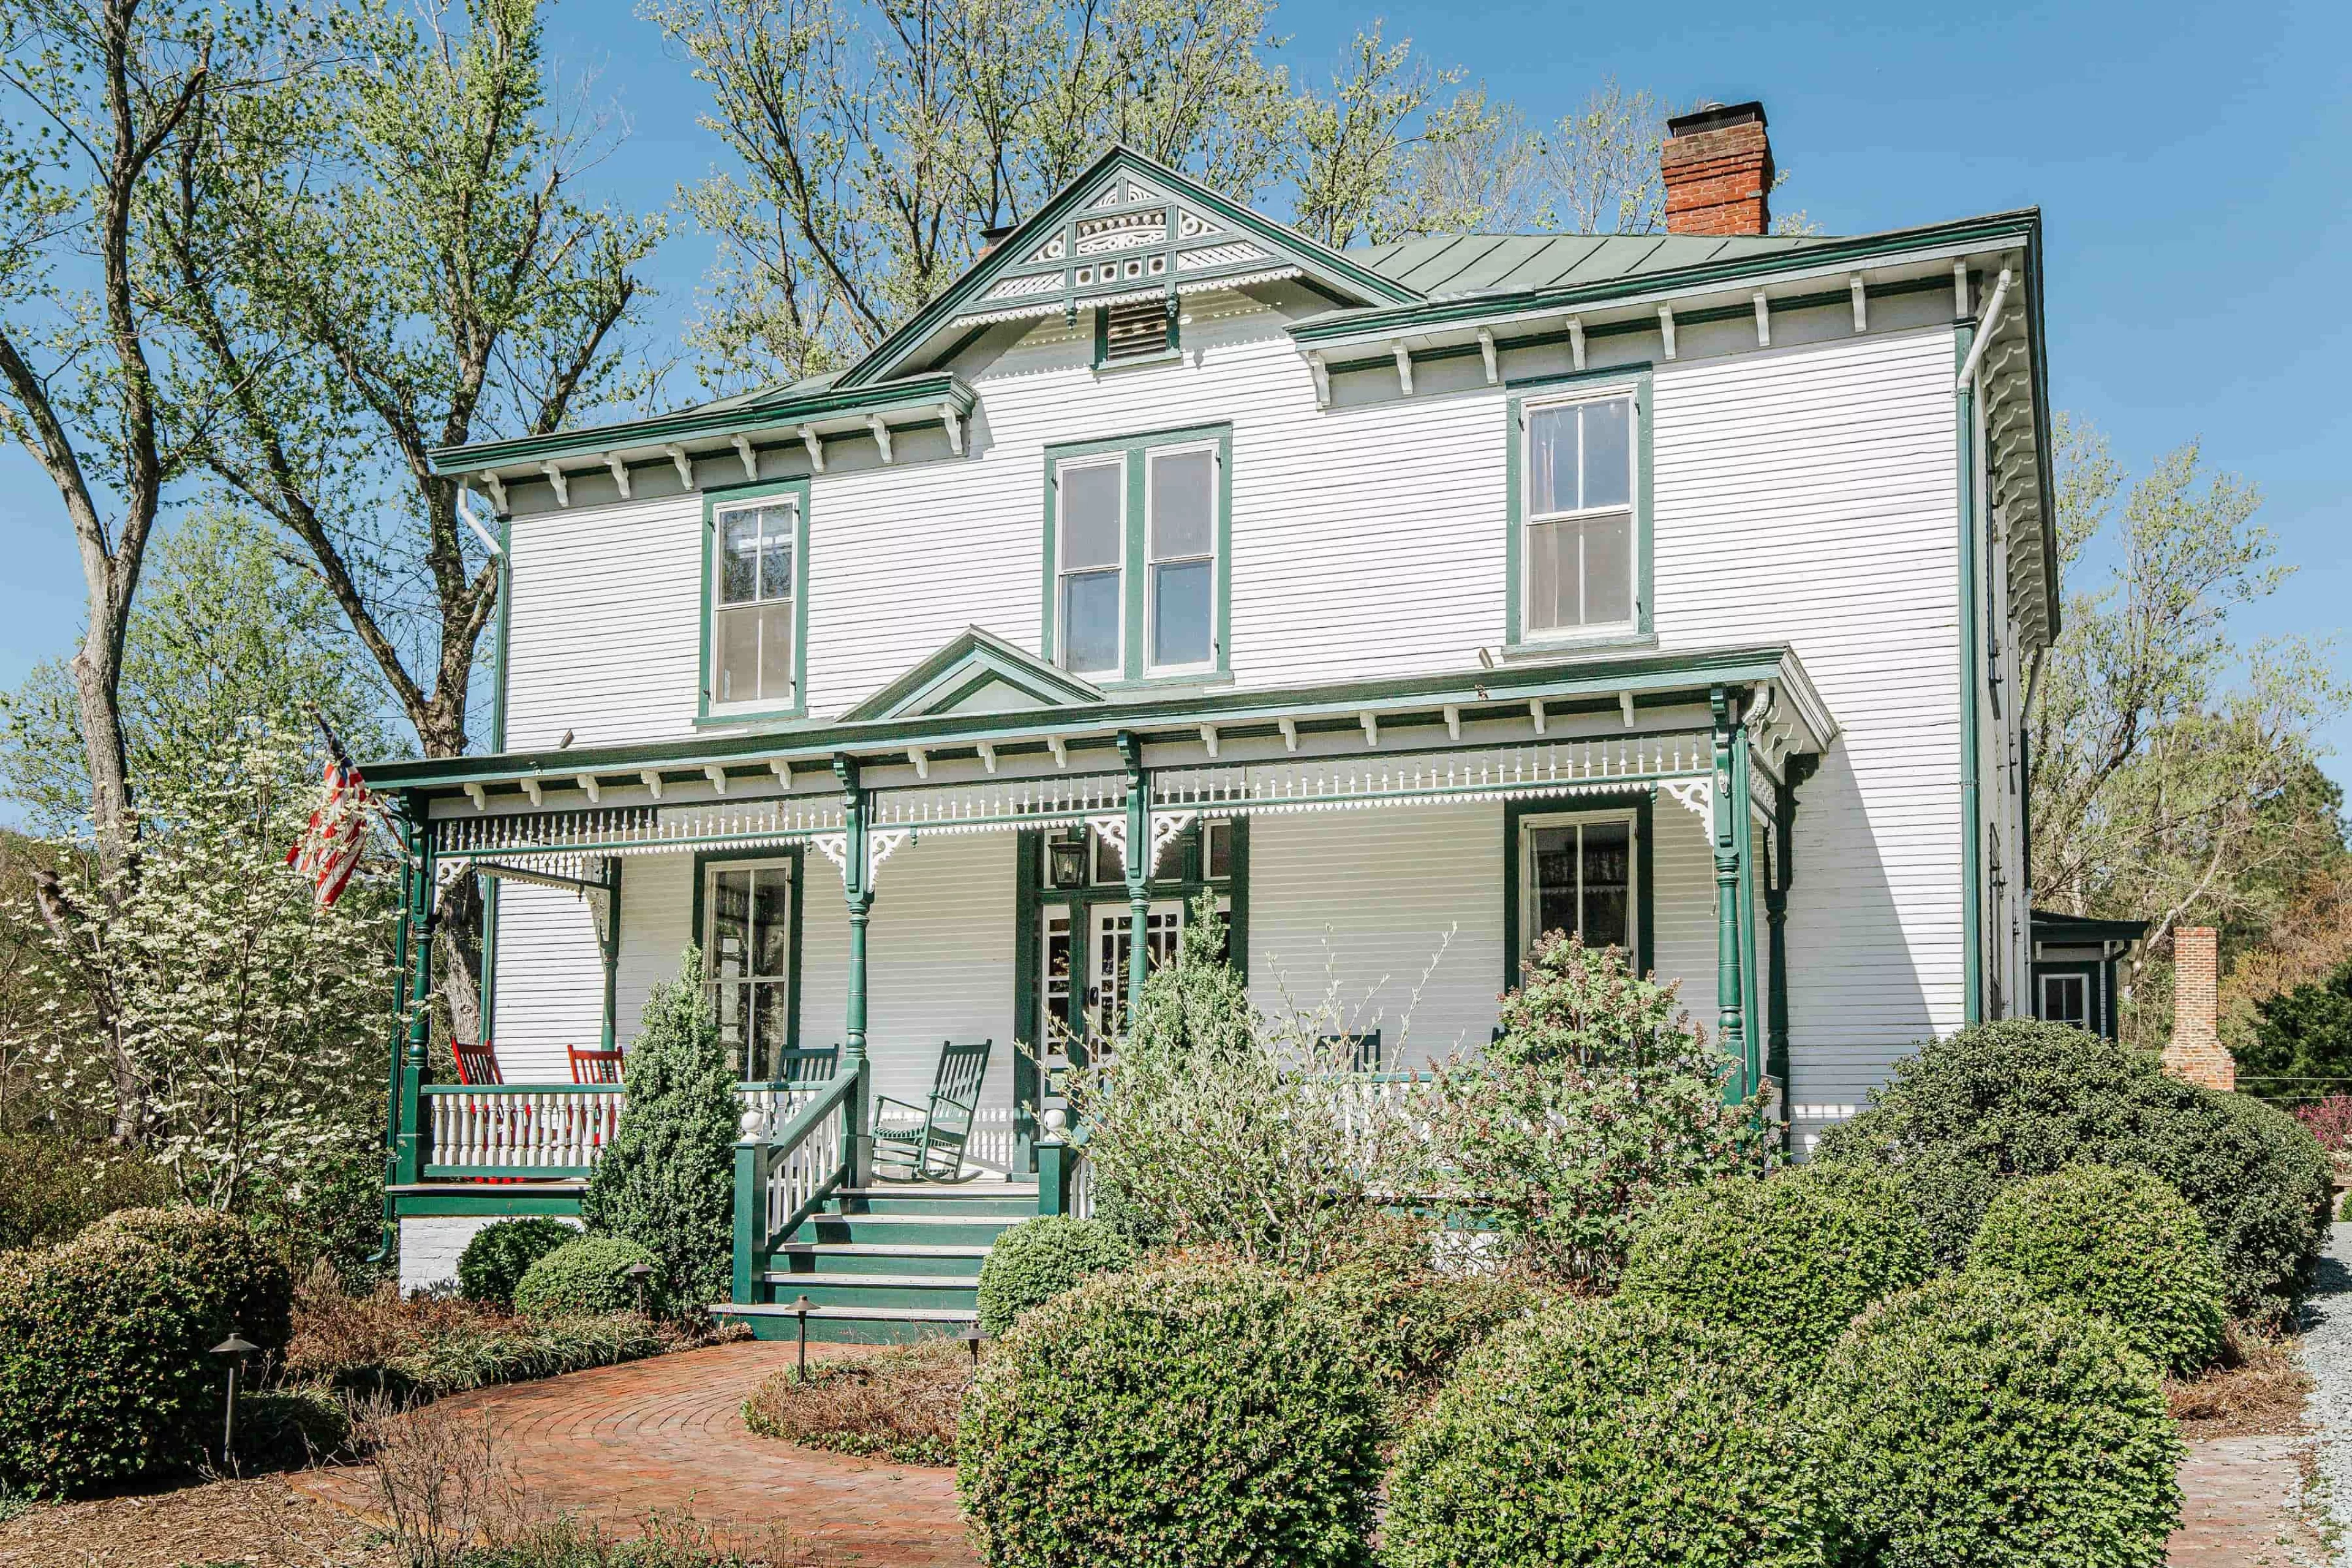 Afton Mountain Inn - Historic Front of House